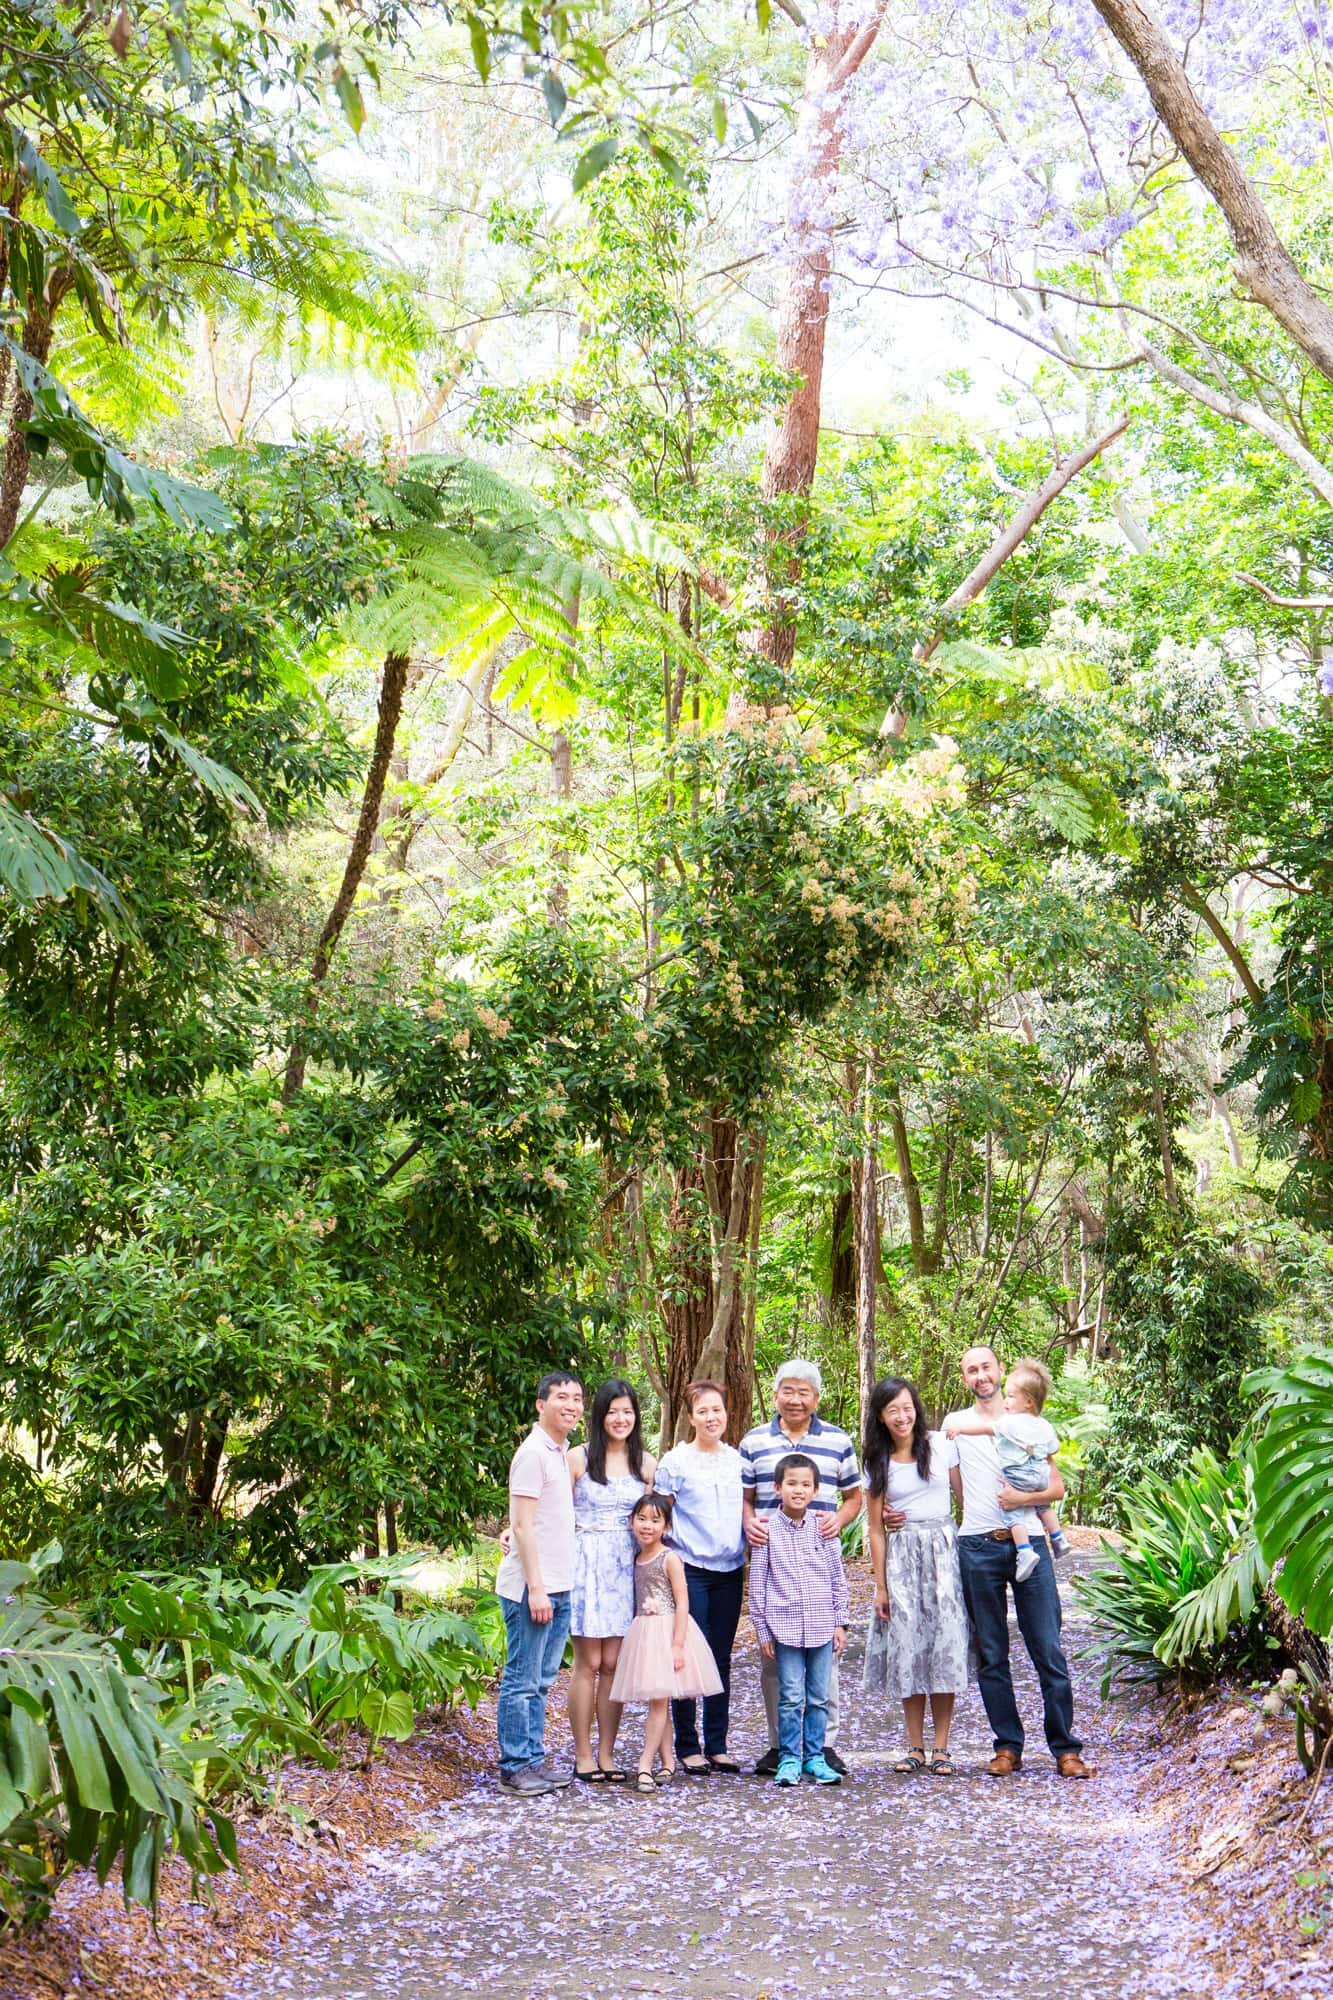 Sydney-family-photographer-outdoor-family-photoshoot-Swain-Gardens-(1).jpg